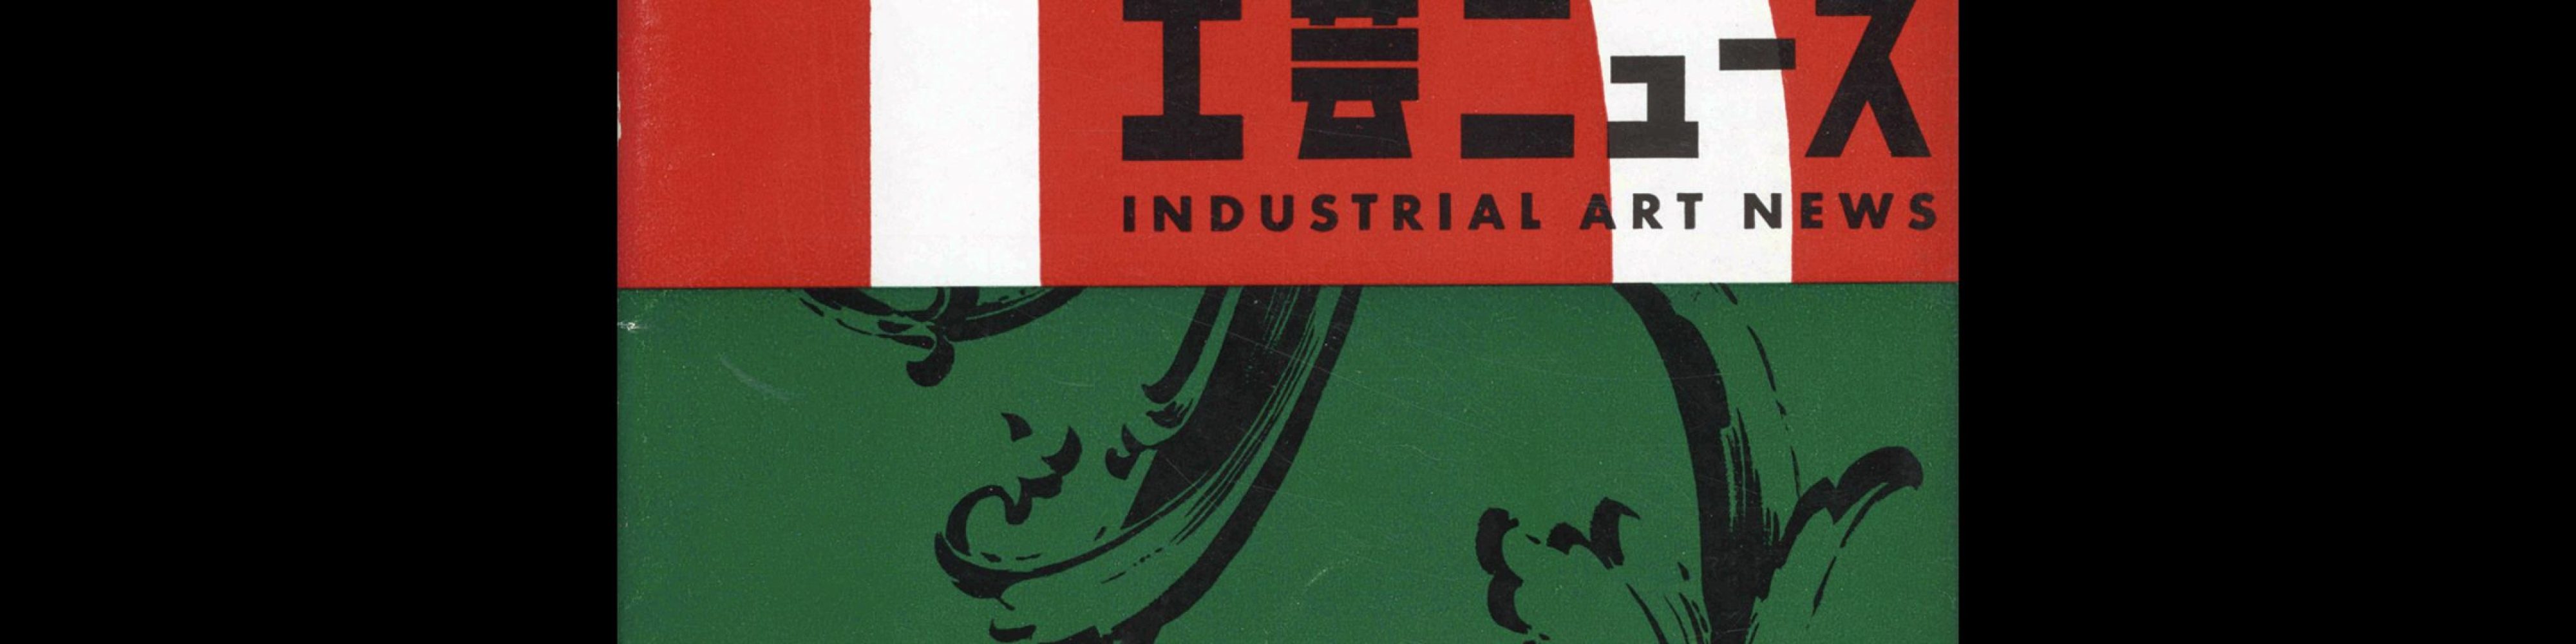 Industrial Art News - Vol. 26, No. 7, August 1958. Cover design by Zen-ichi Mano